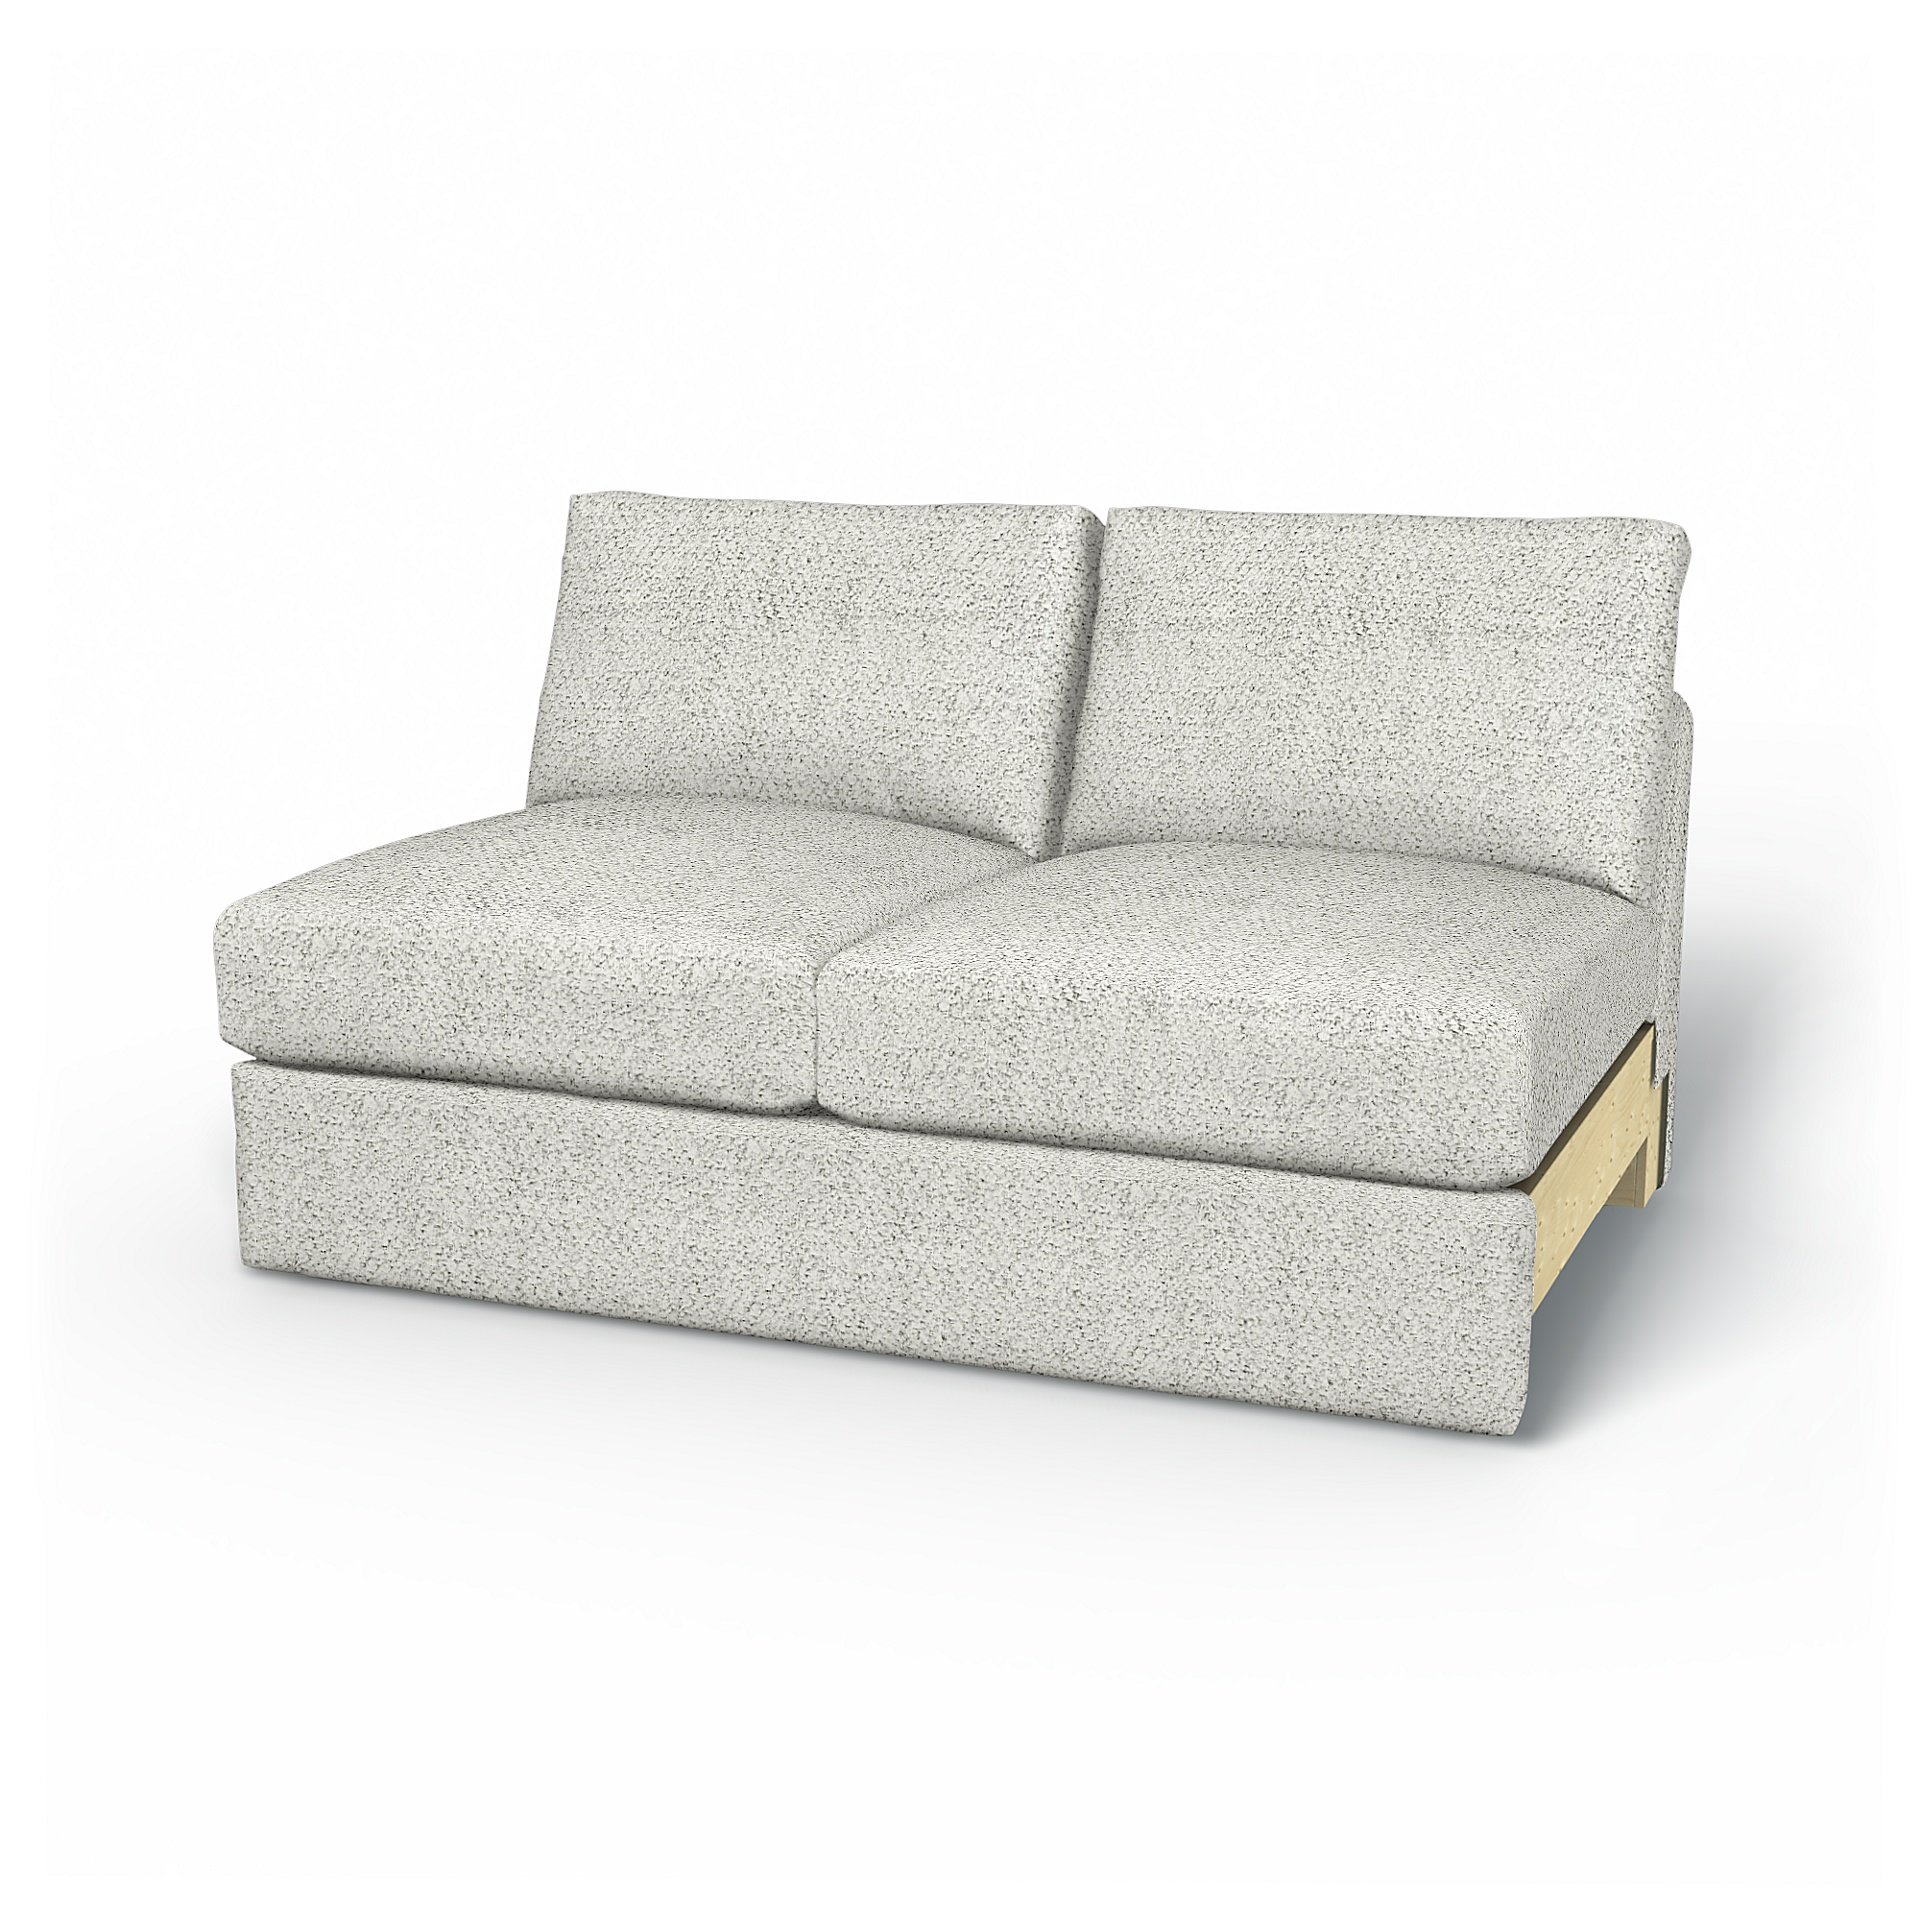 IKEA - Vimle 2 seater bed sofa without armrests, Ivory, Boucle & Texture - Bemz